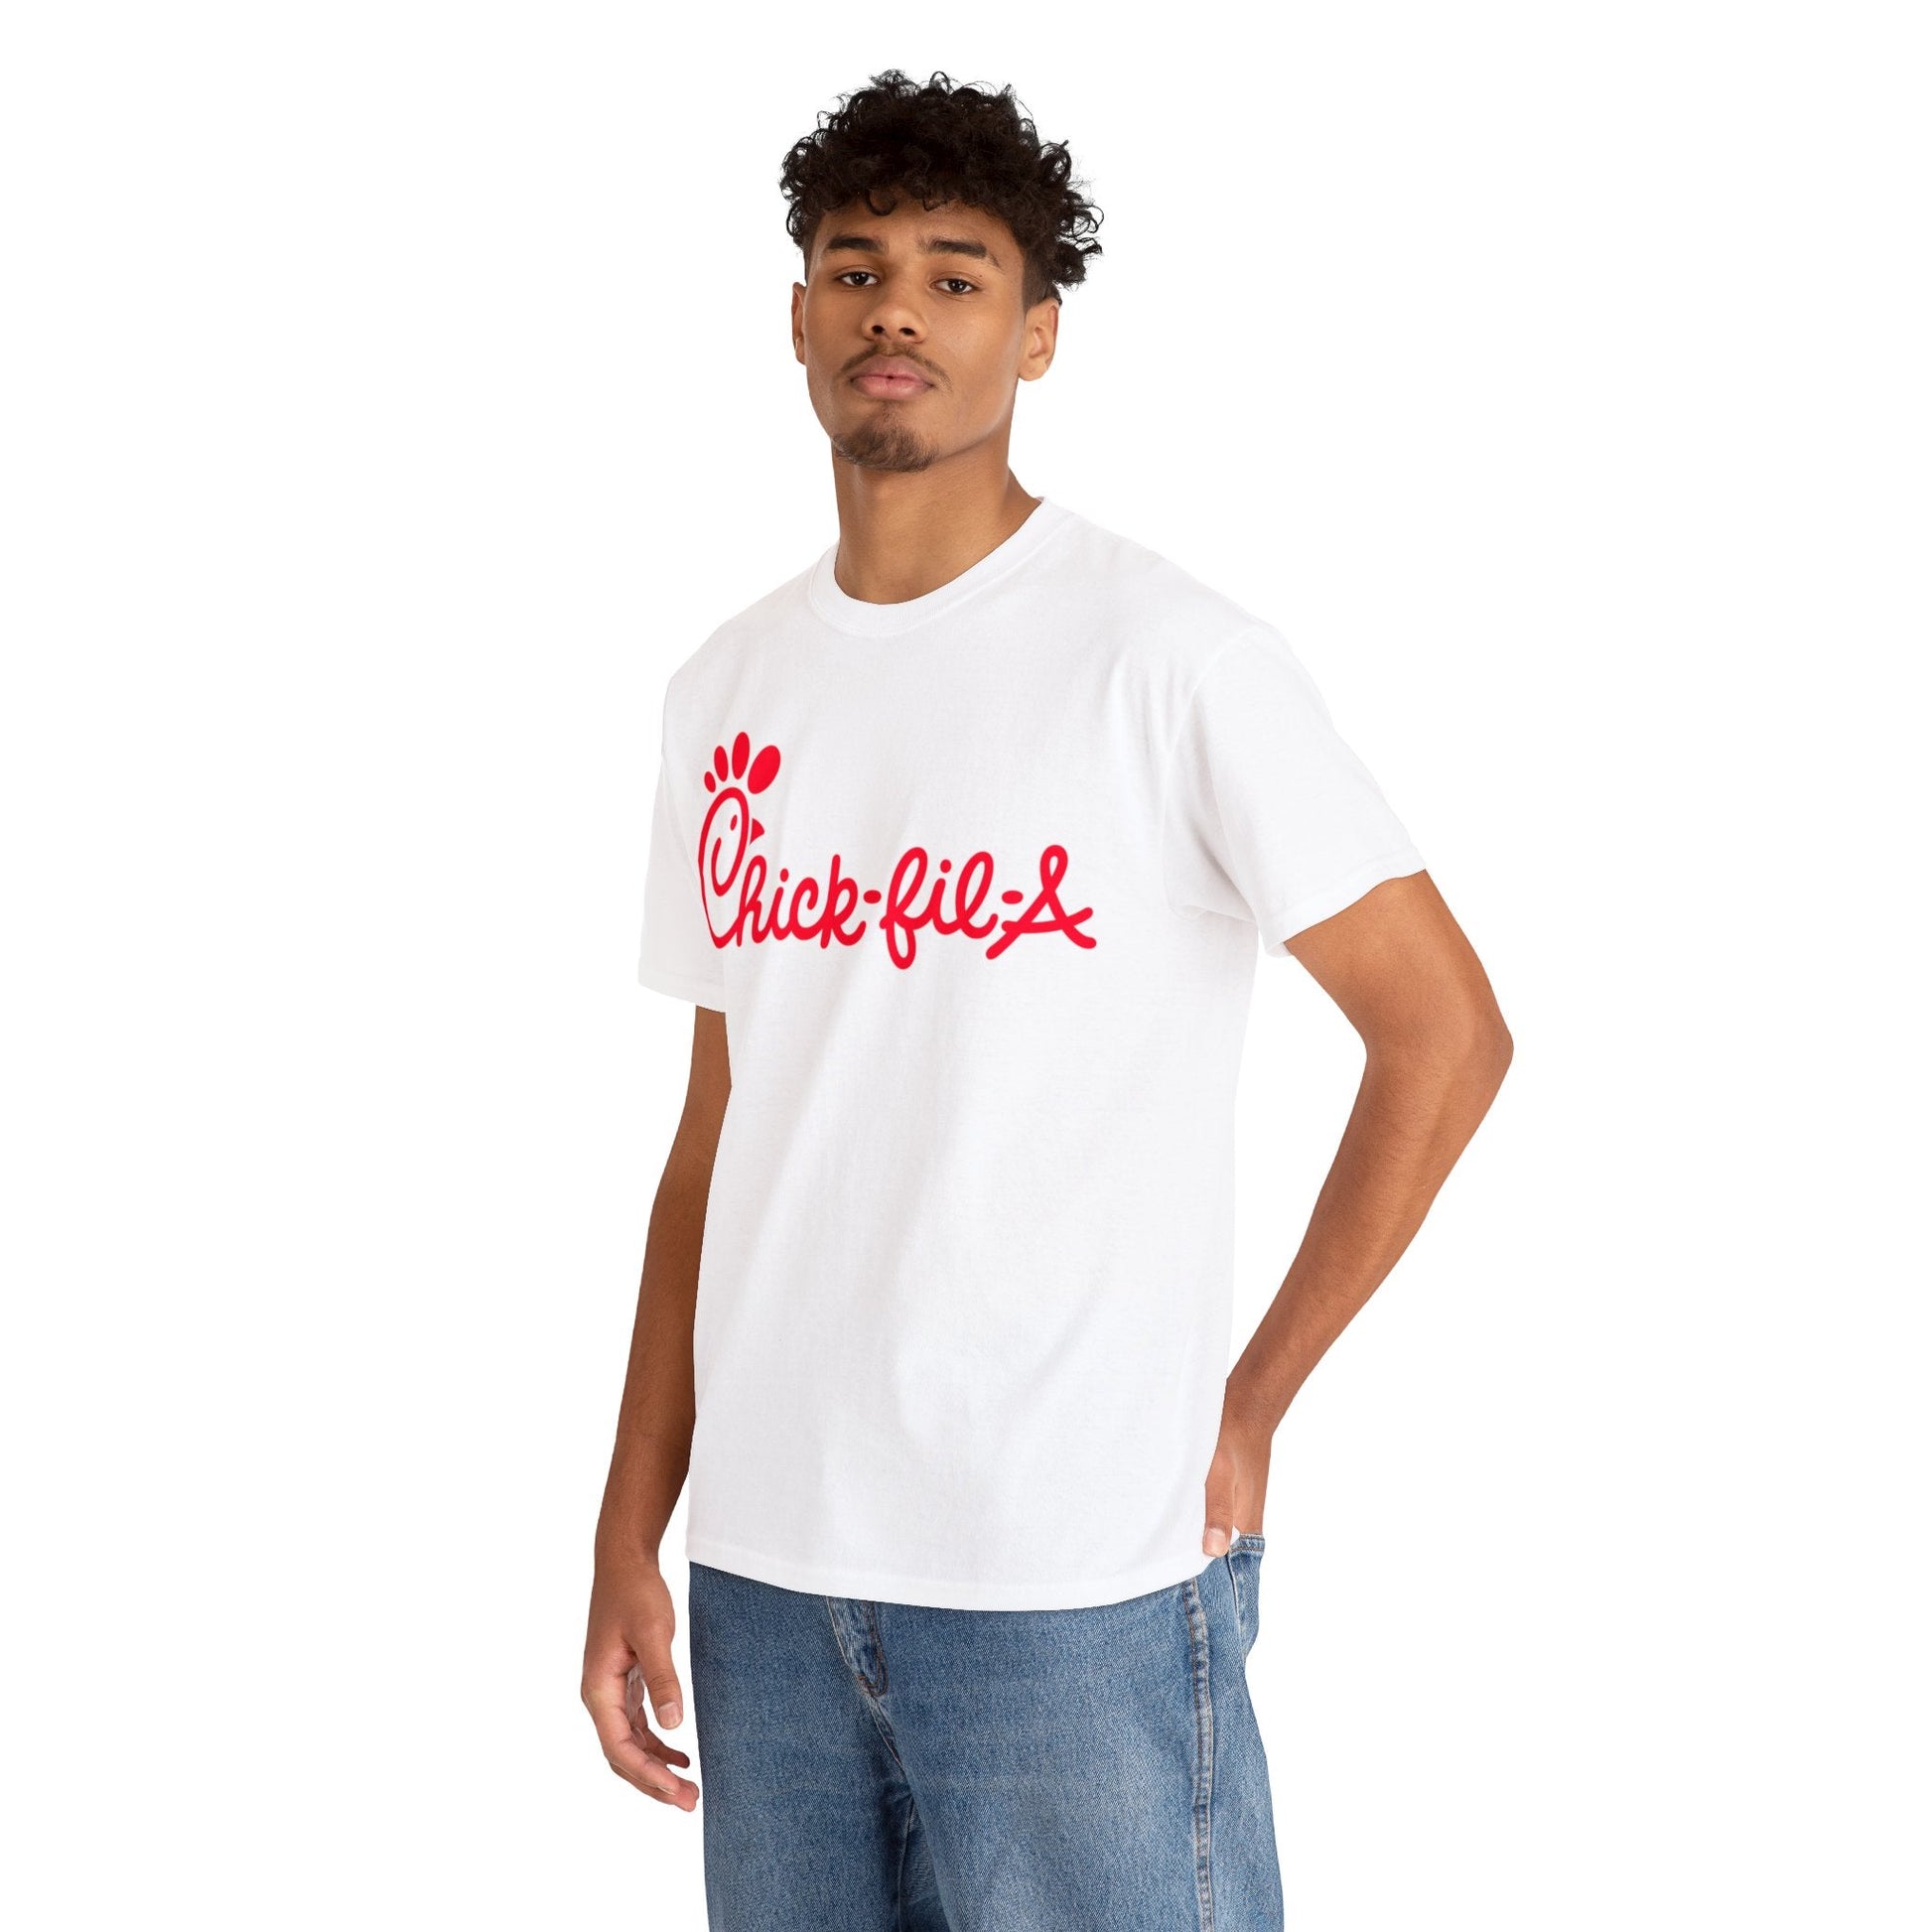 Chick-fil-A Chicken Logo T-Shirt - RetroTeeShop